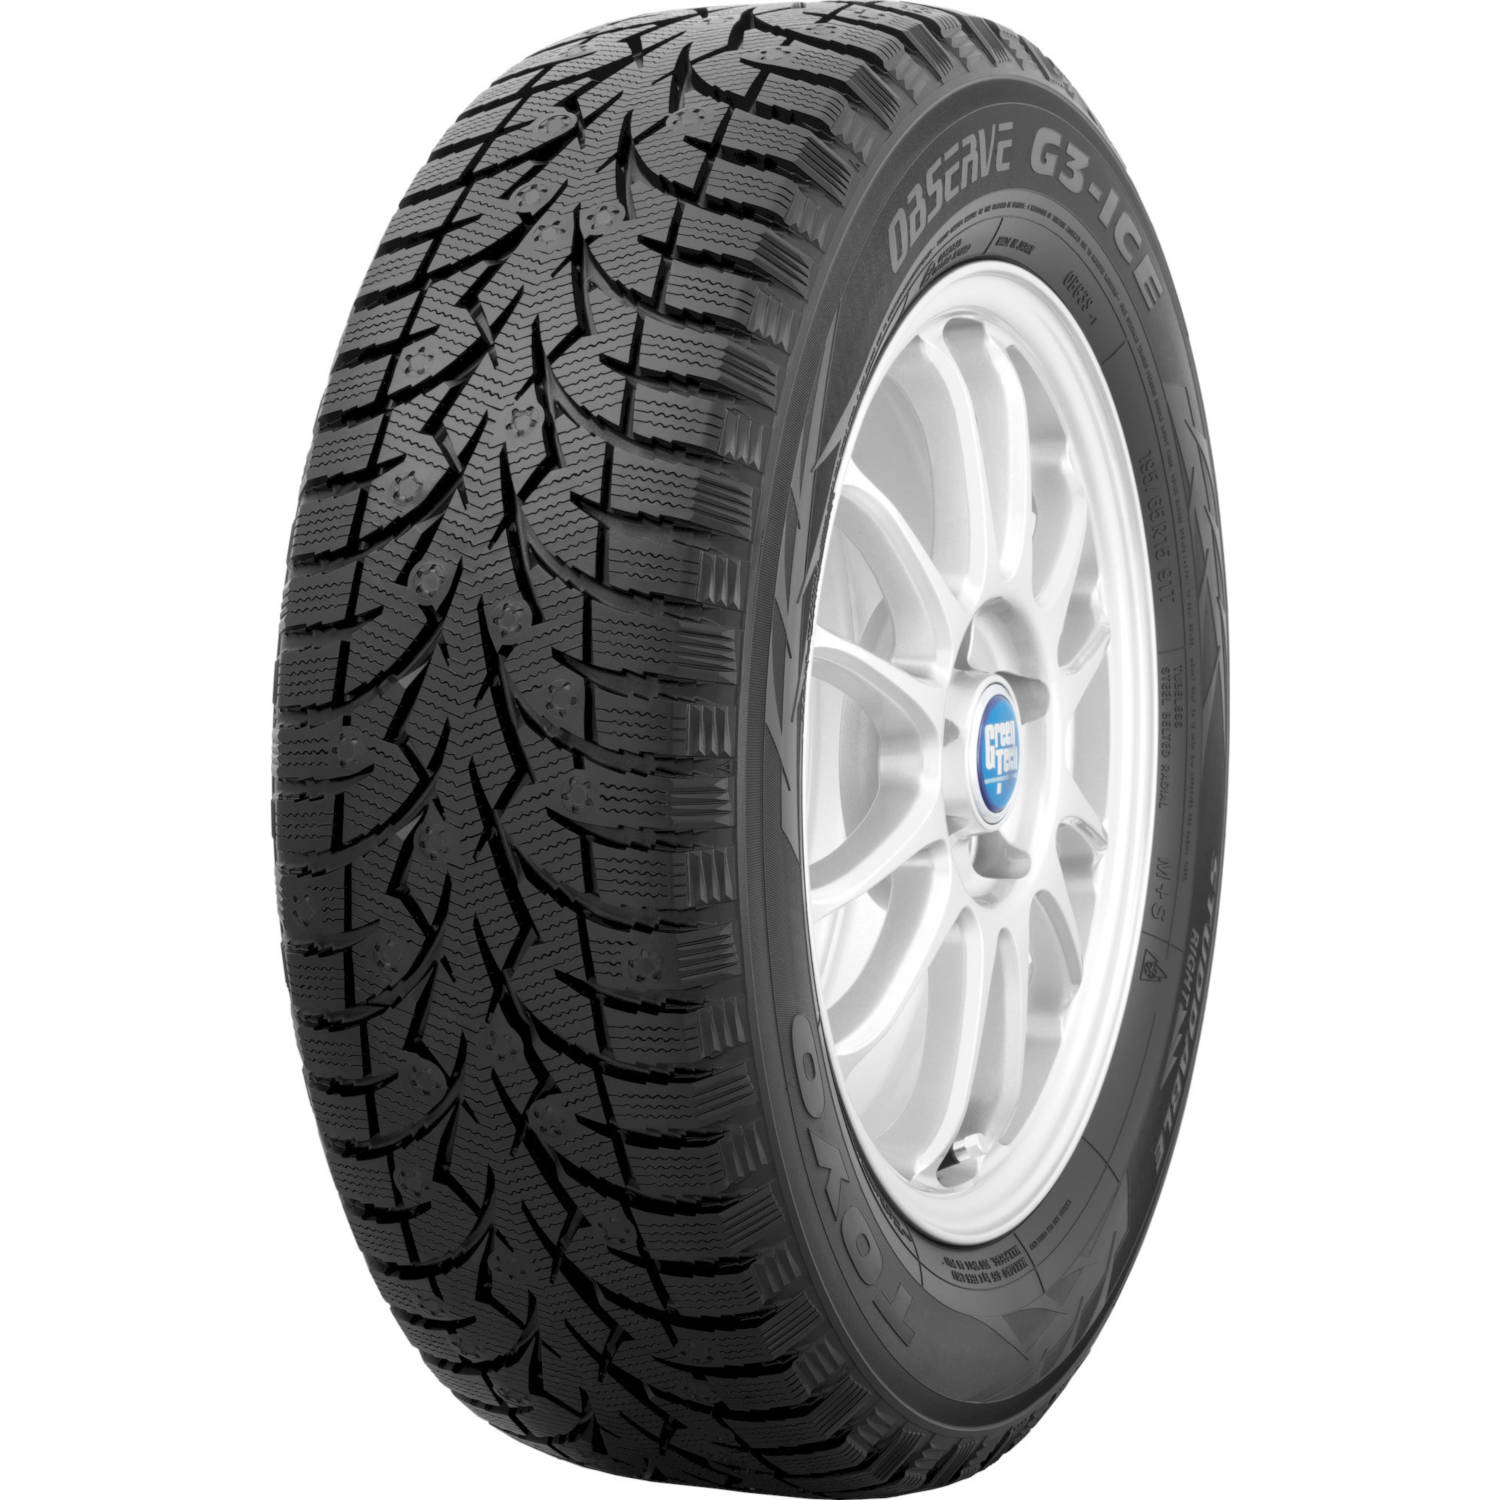 TOYO TIRES OBSERVE G3 ICE 225/55R17XL (26.8X8.9R 17) Tires